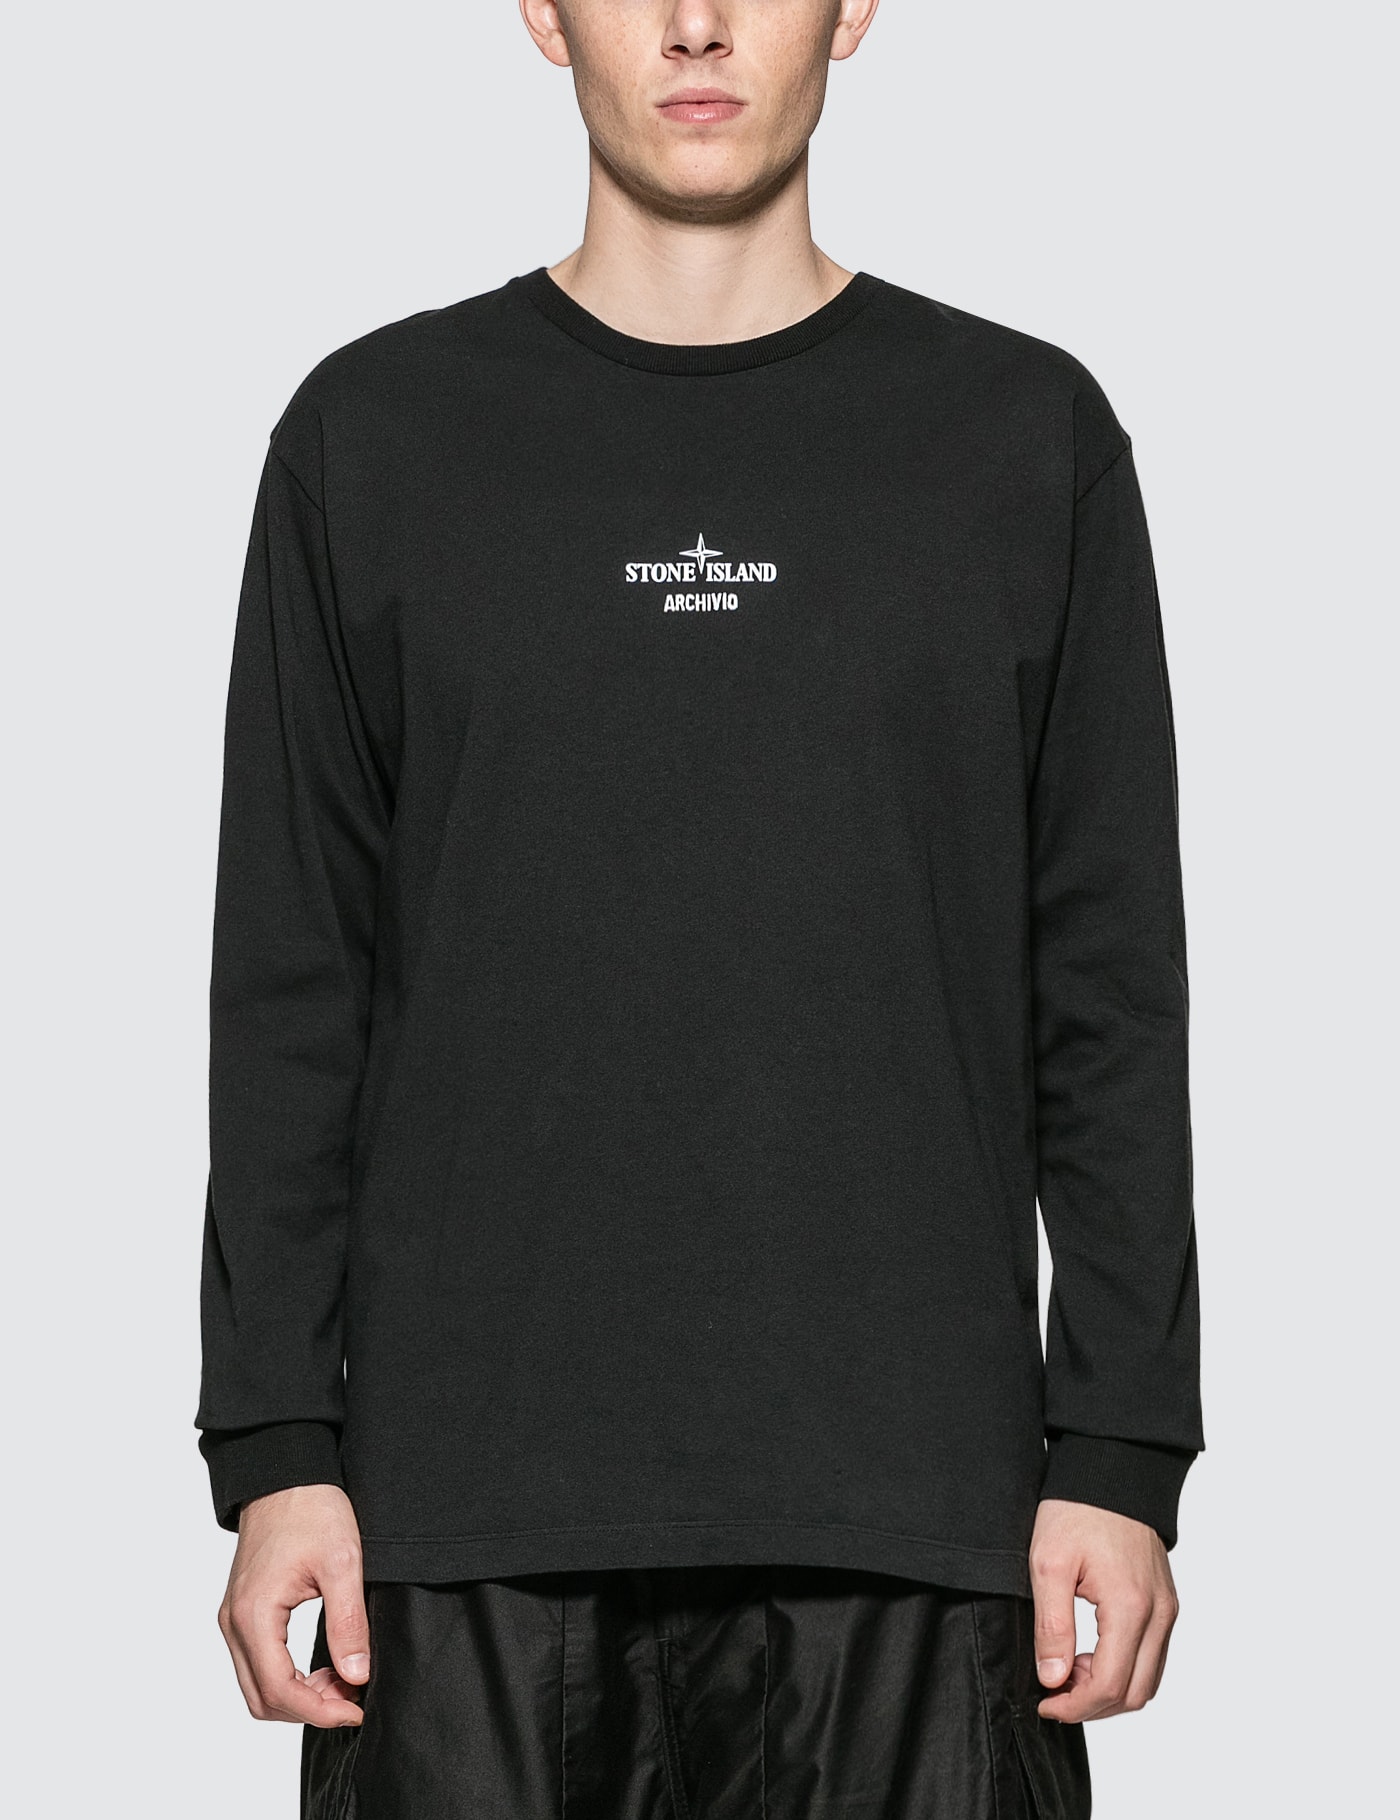 Stone Island - Archivio Project Long Sleeve T-Shirt | HBX